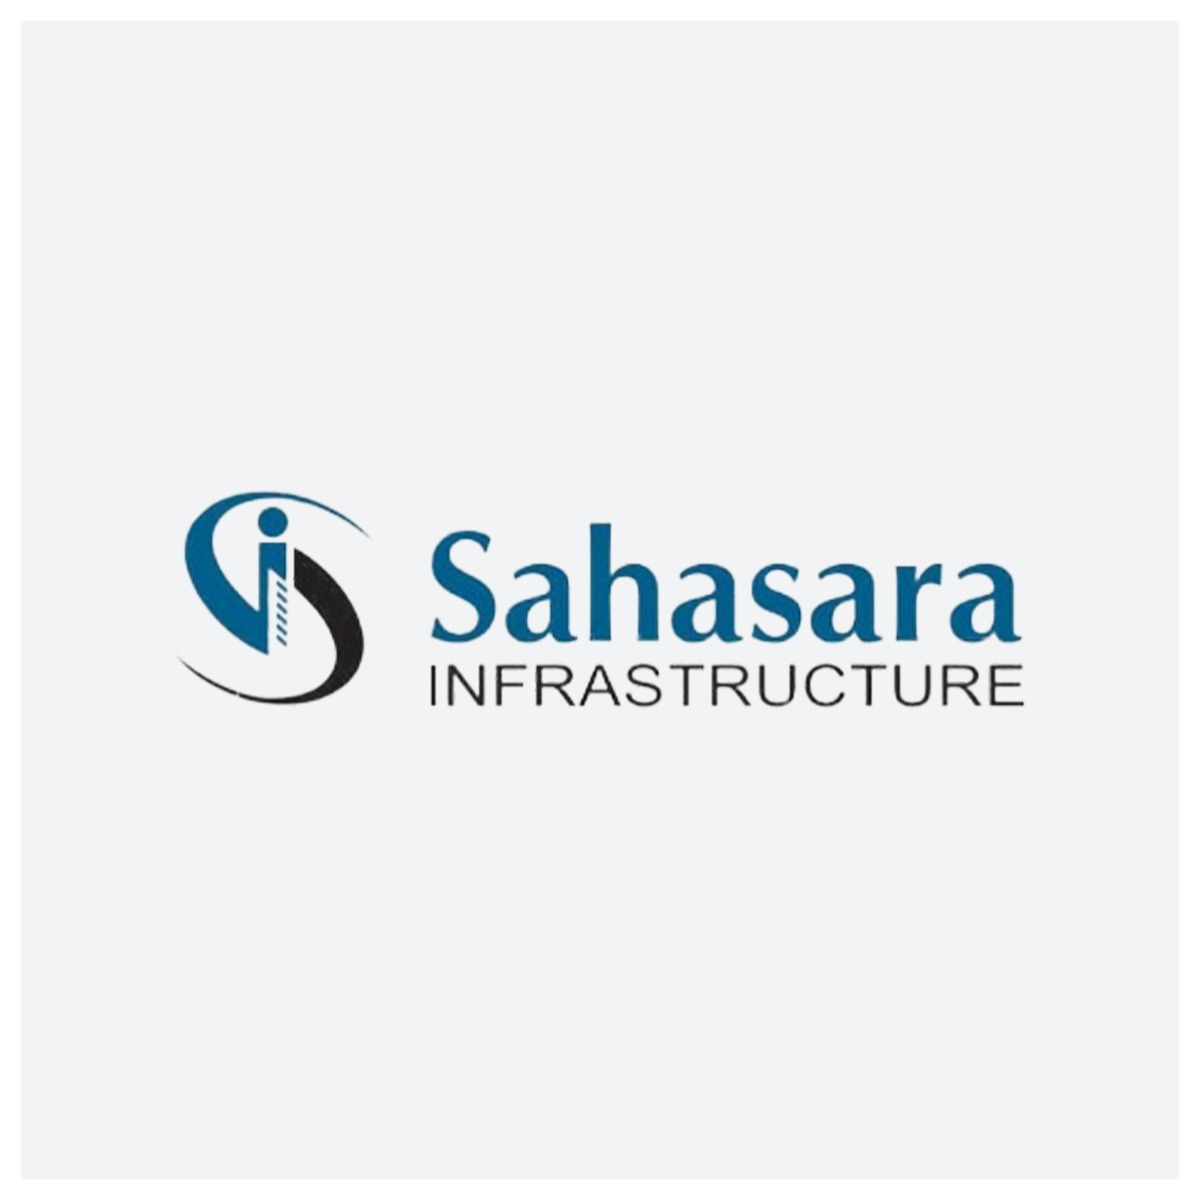 Sahasara Logo